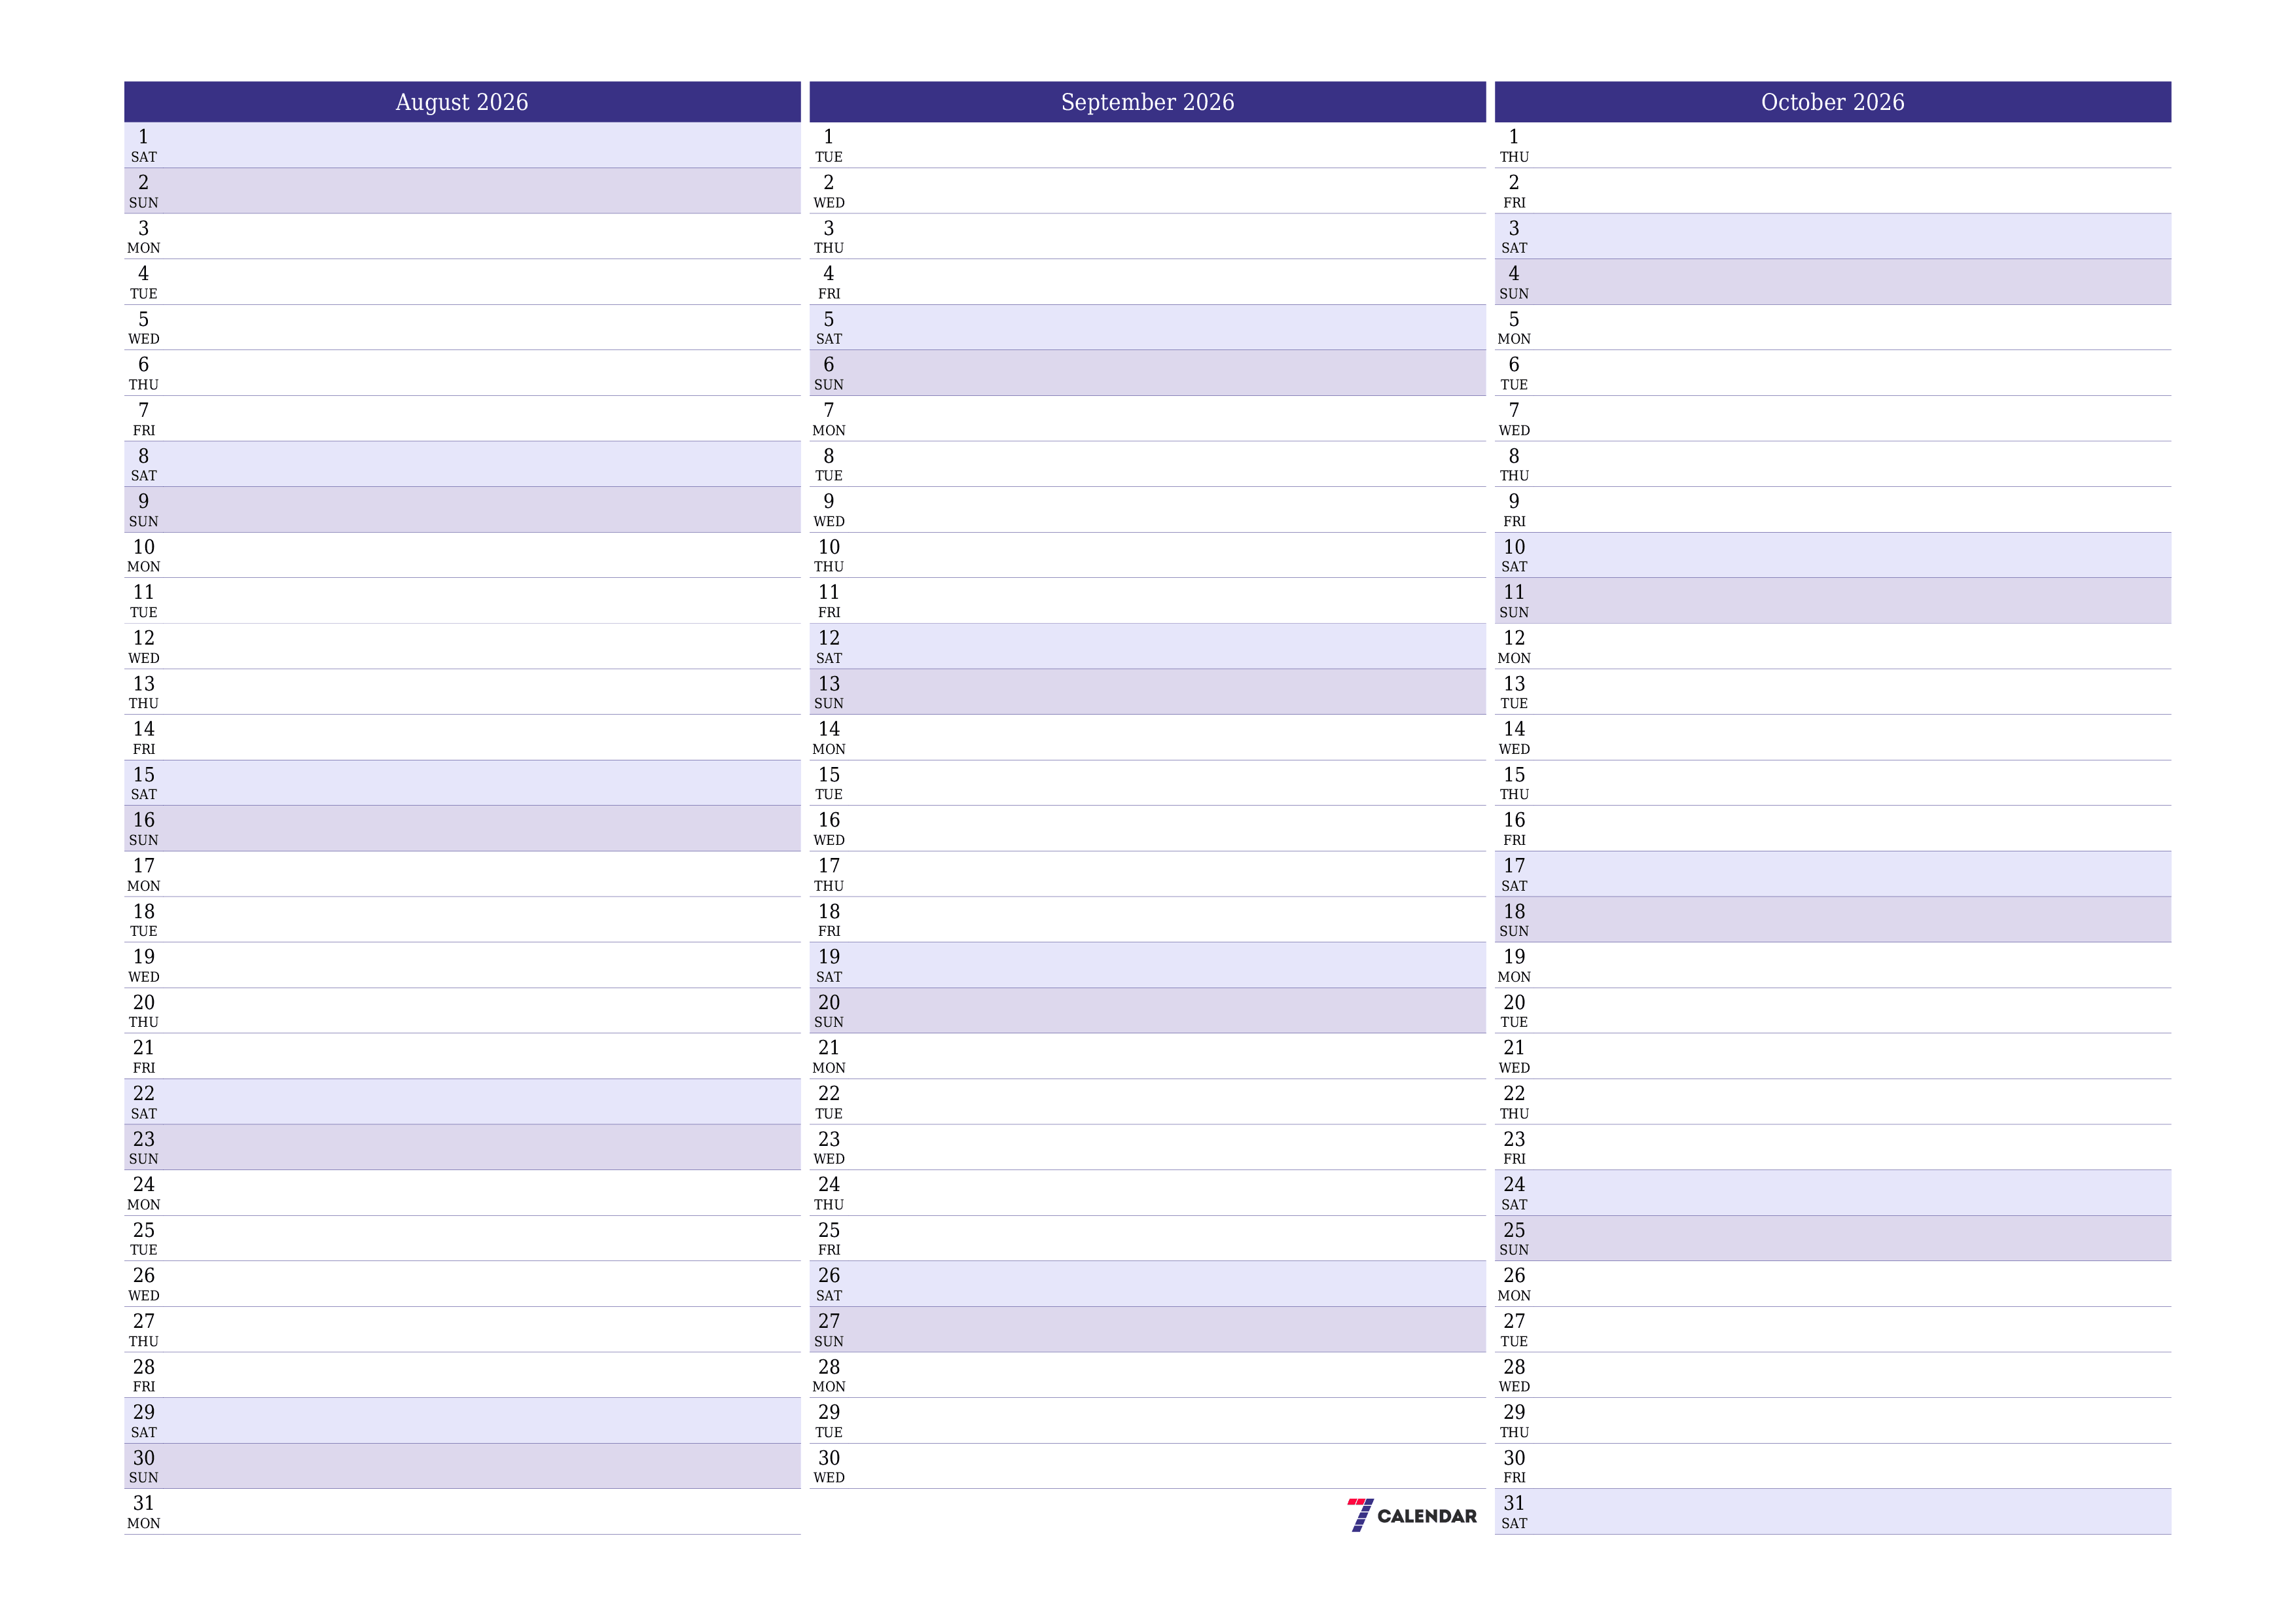 Blank calendar August 2026